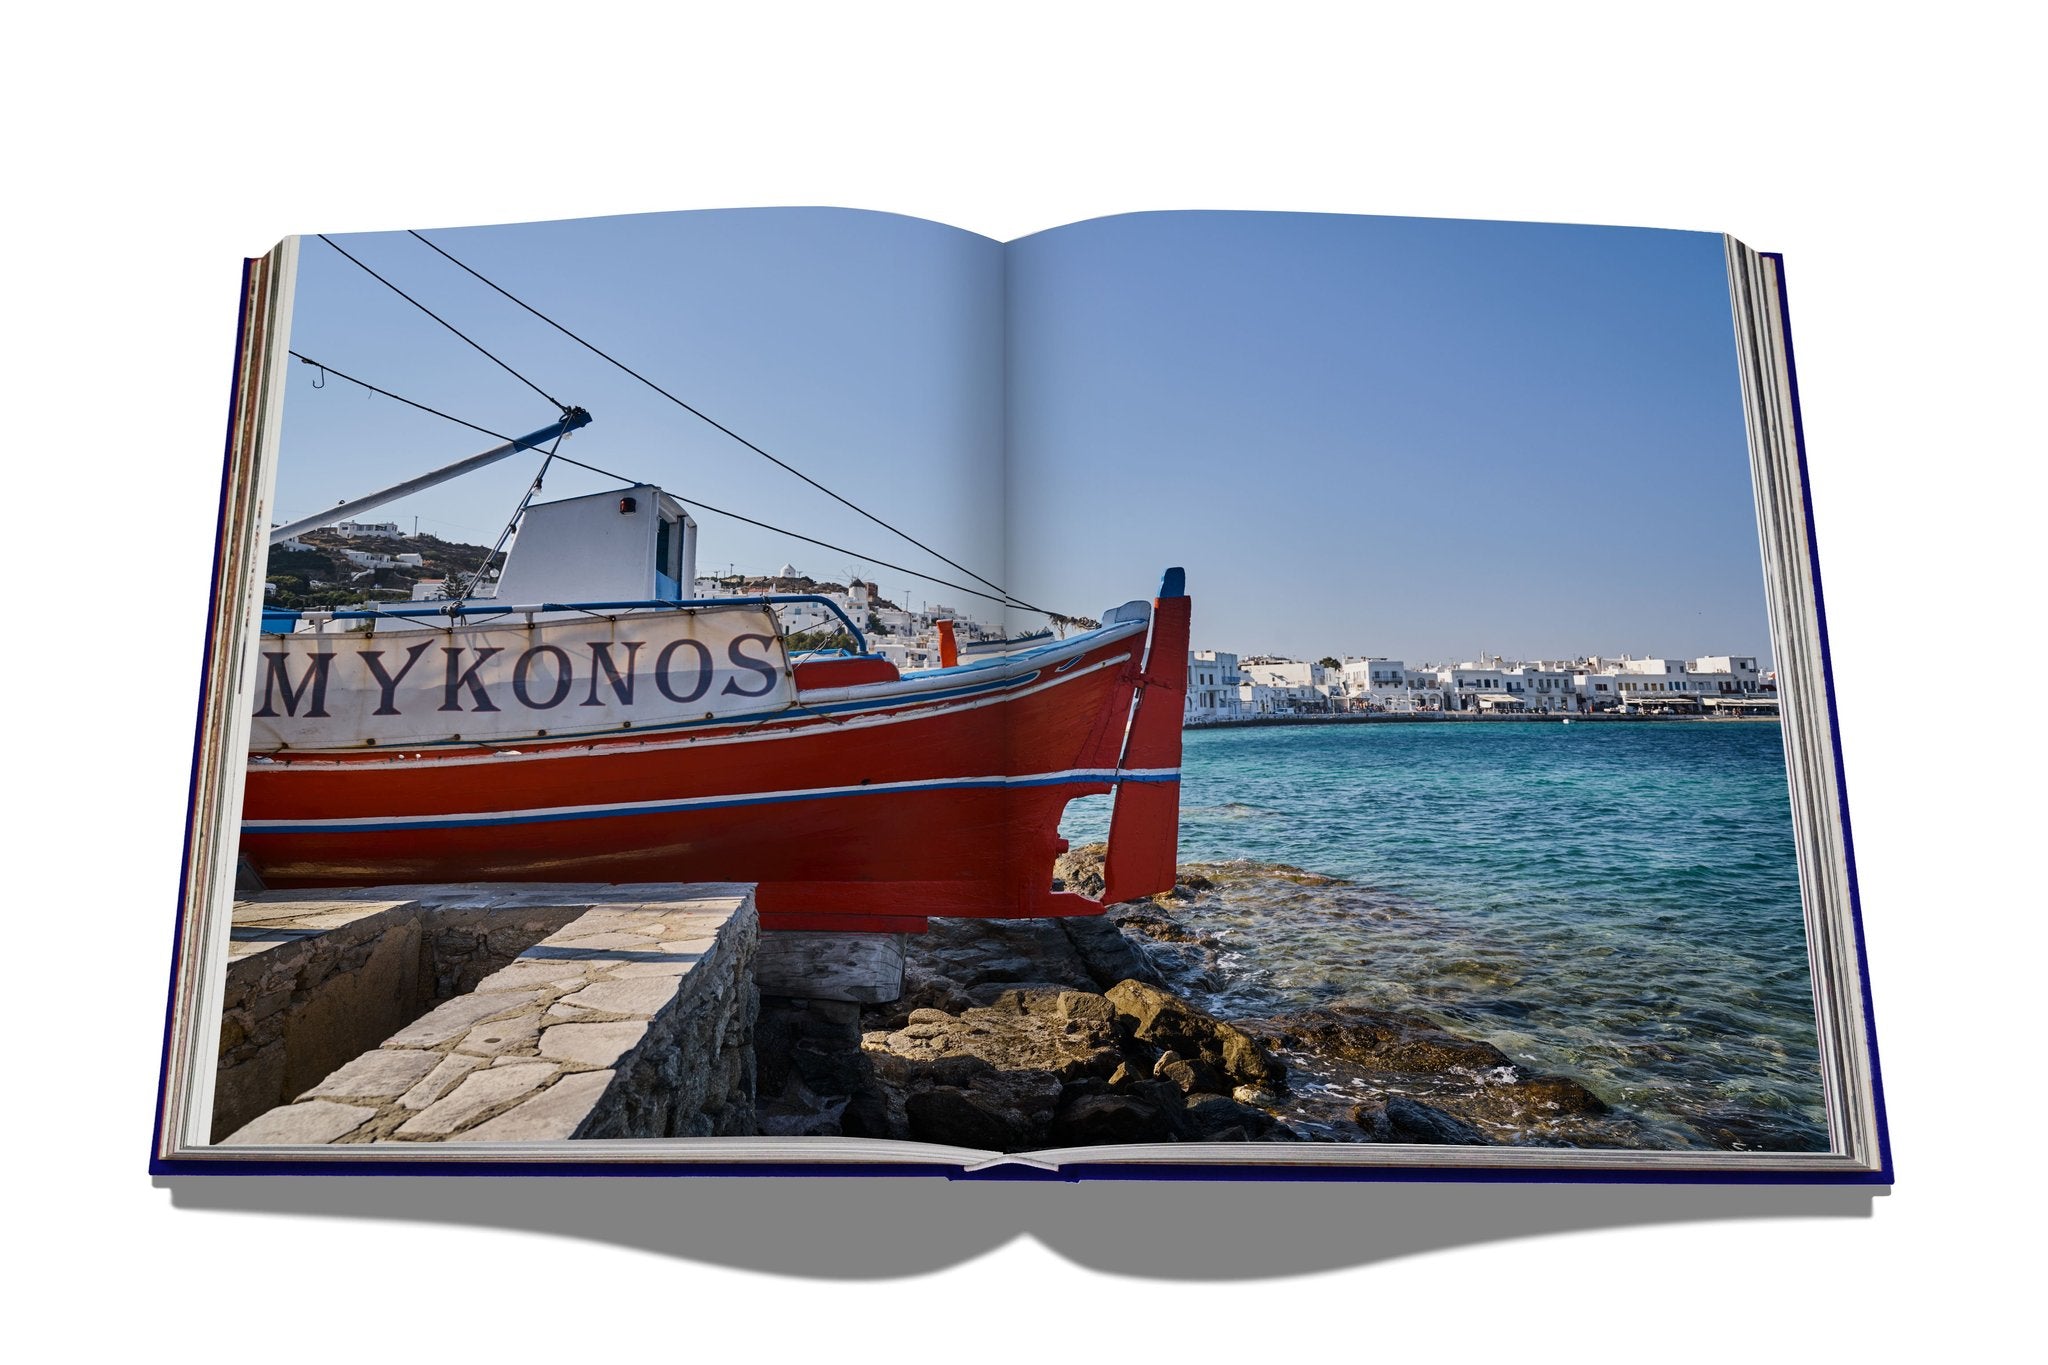 ASSOULINE Mykonos Muse Hardcover Book by Lizy Manola